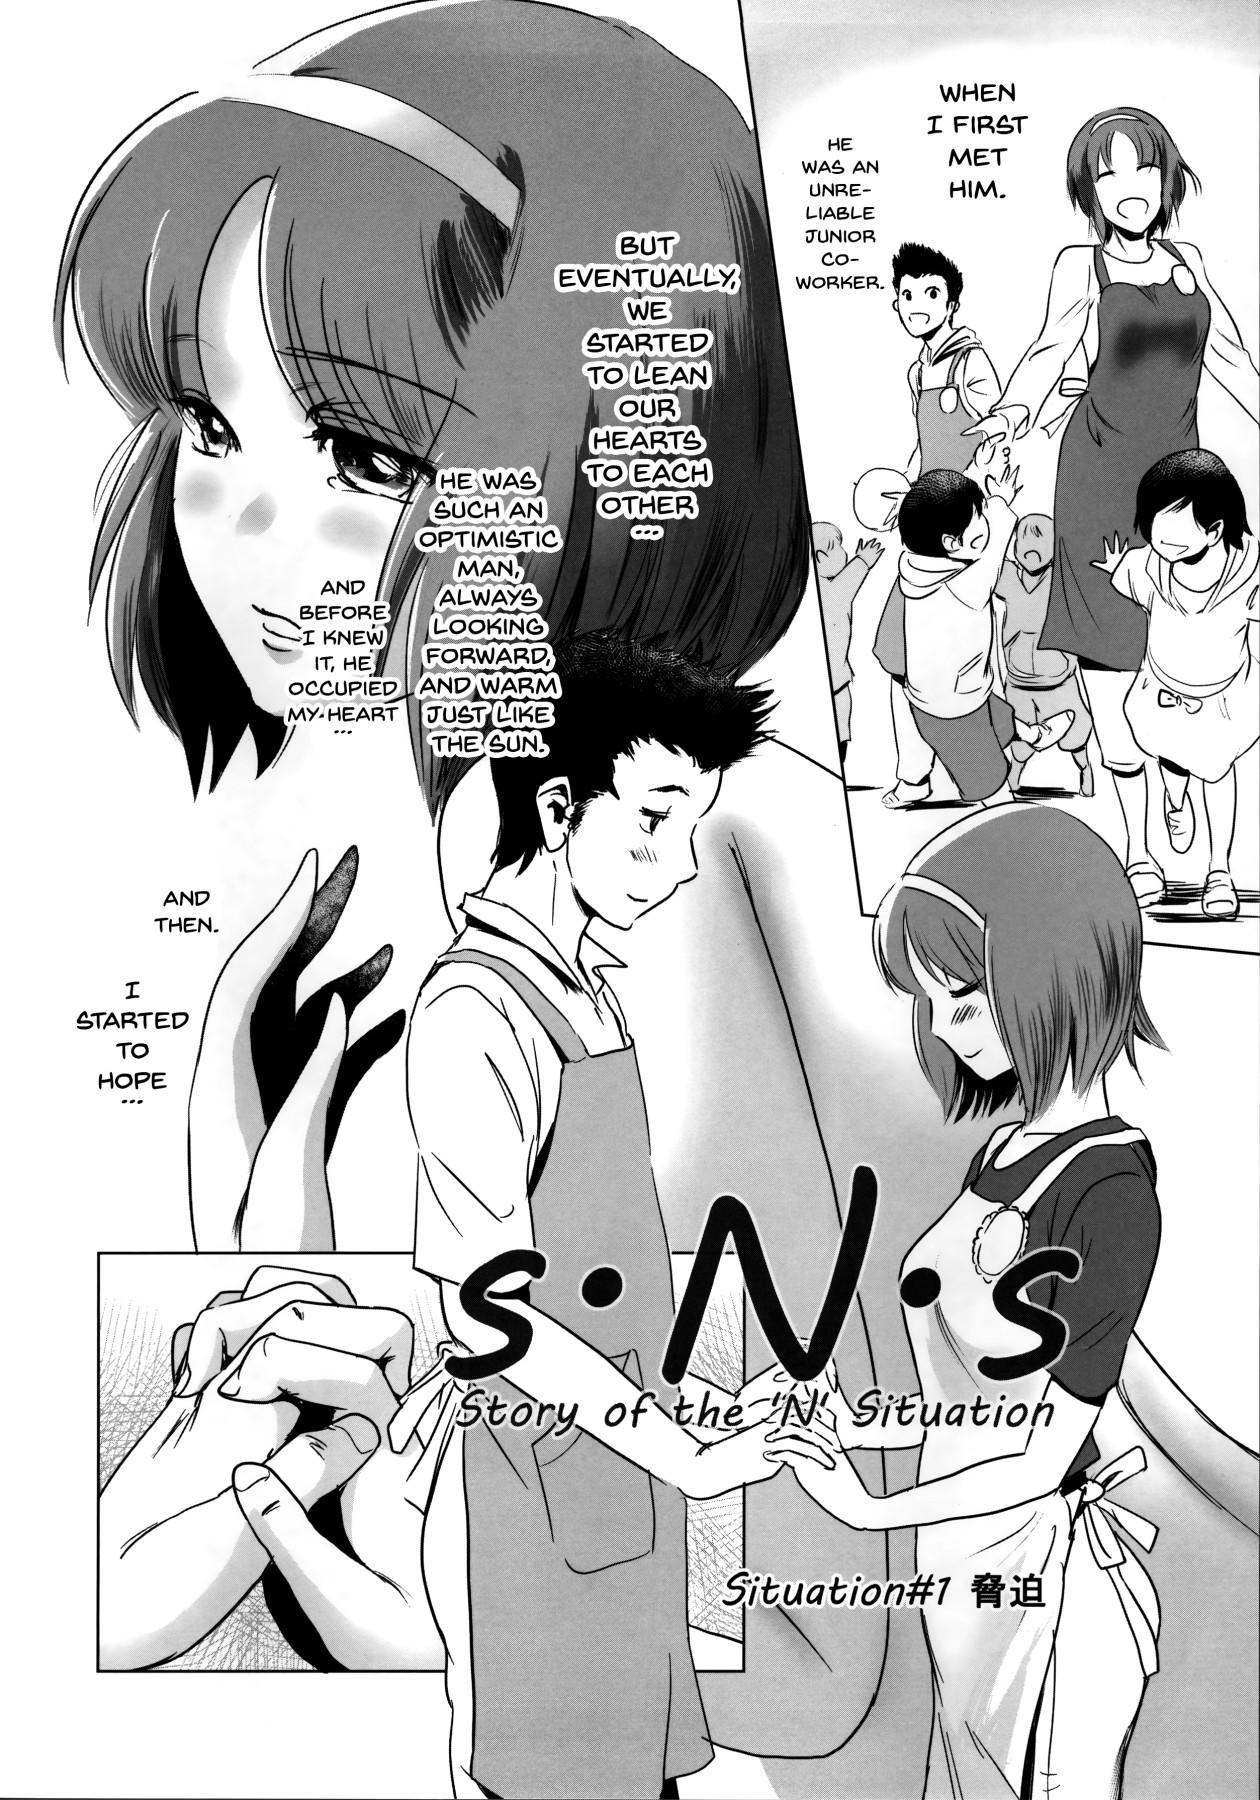 Corno Story of the 'N' Situation - Situation#1 Kyouhaku - Original Girlongirl - Page 5